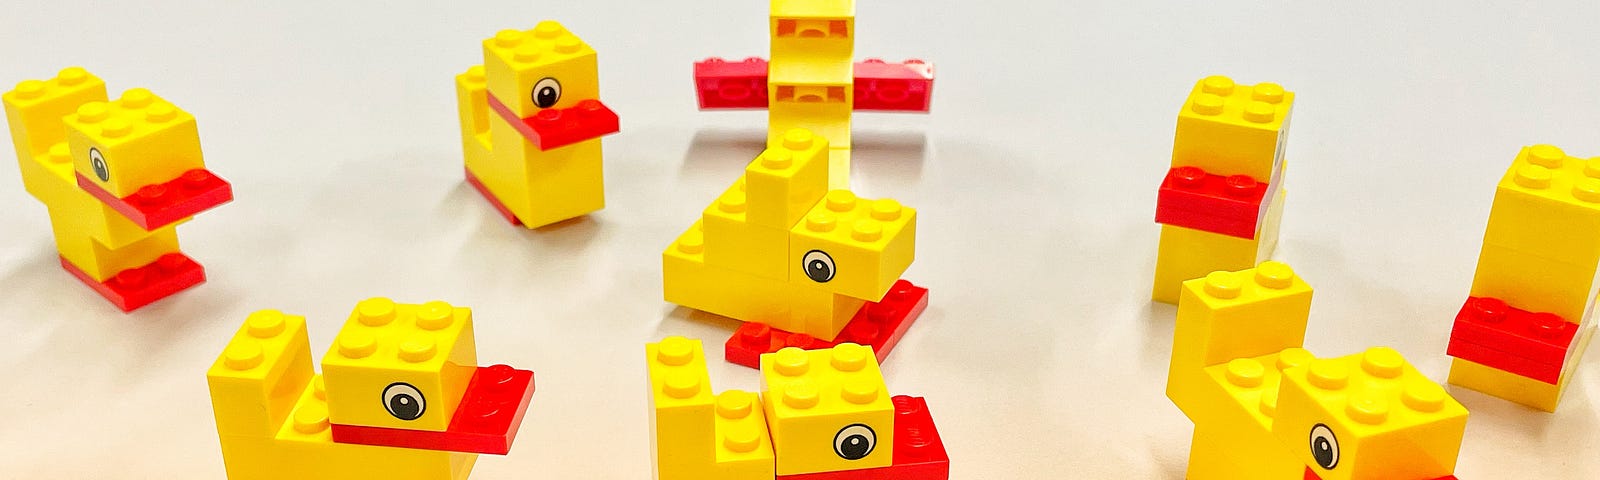 Lego ducks from activity